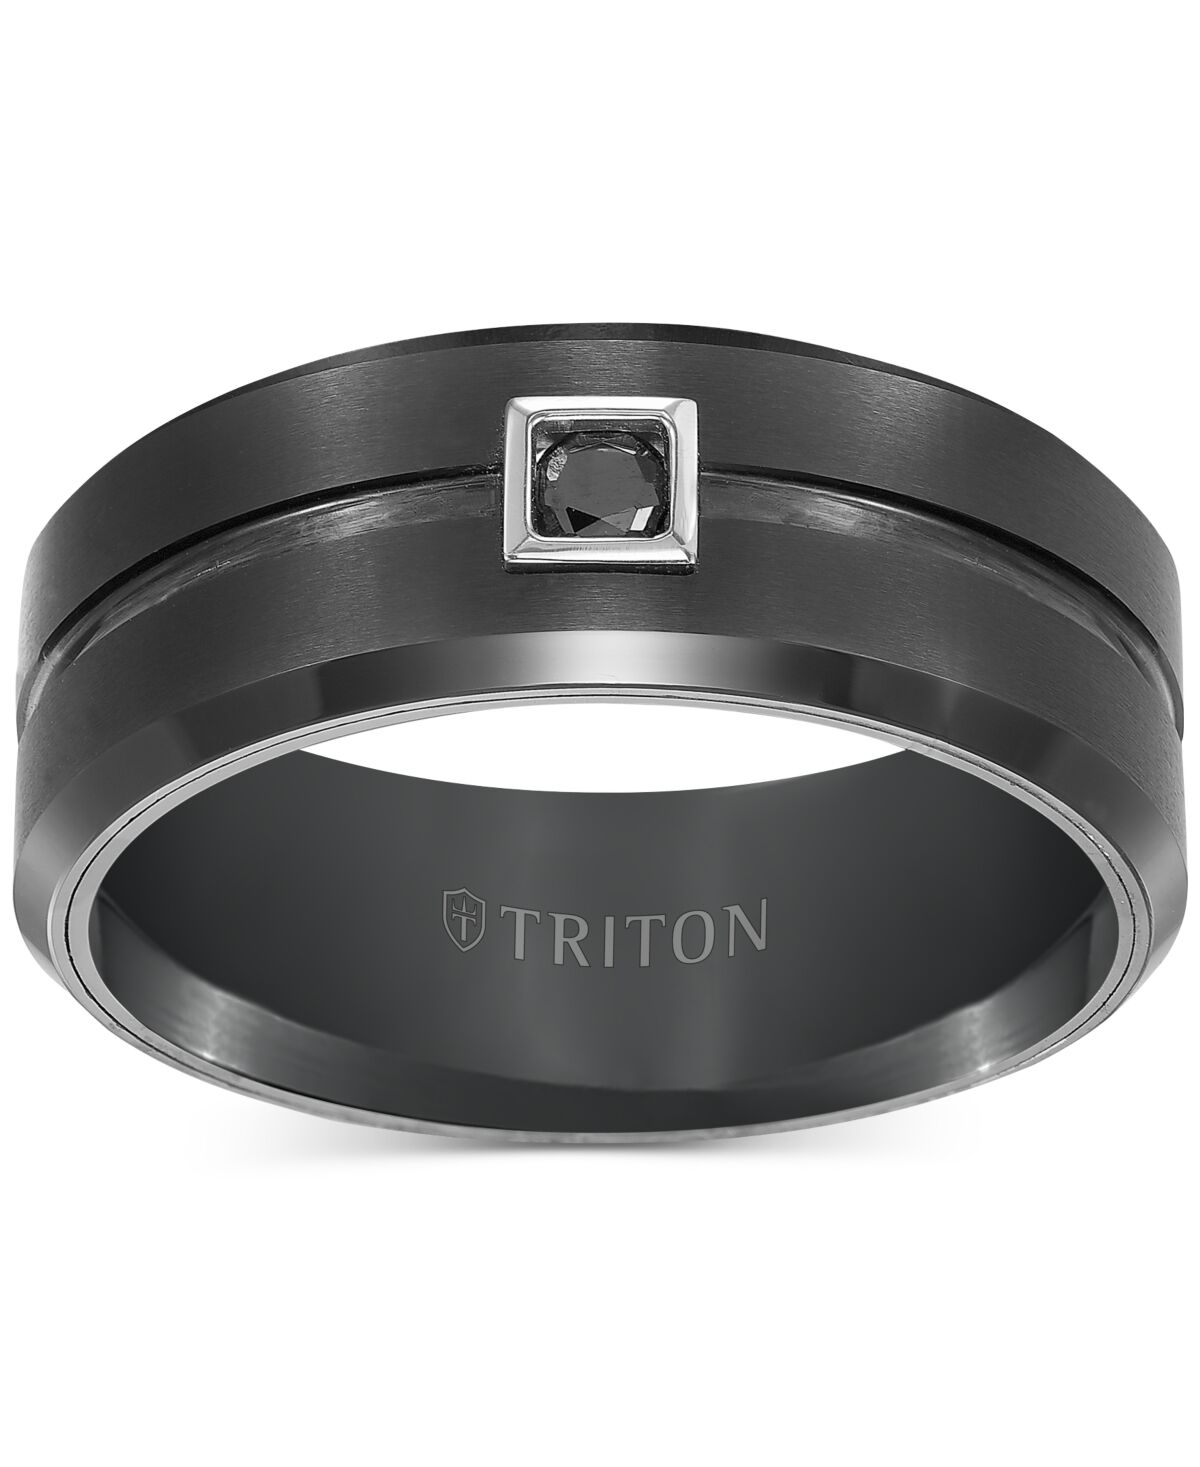 Triton Men's Black Tungsten Ring, Black Diamond Wedding Band (1/10 ct. t.w.) - Tungsten